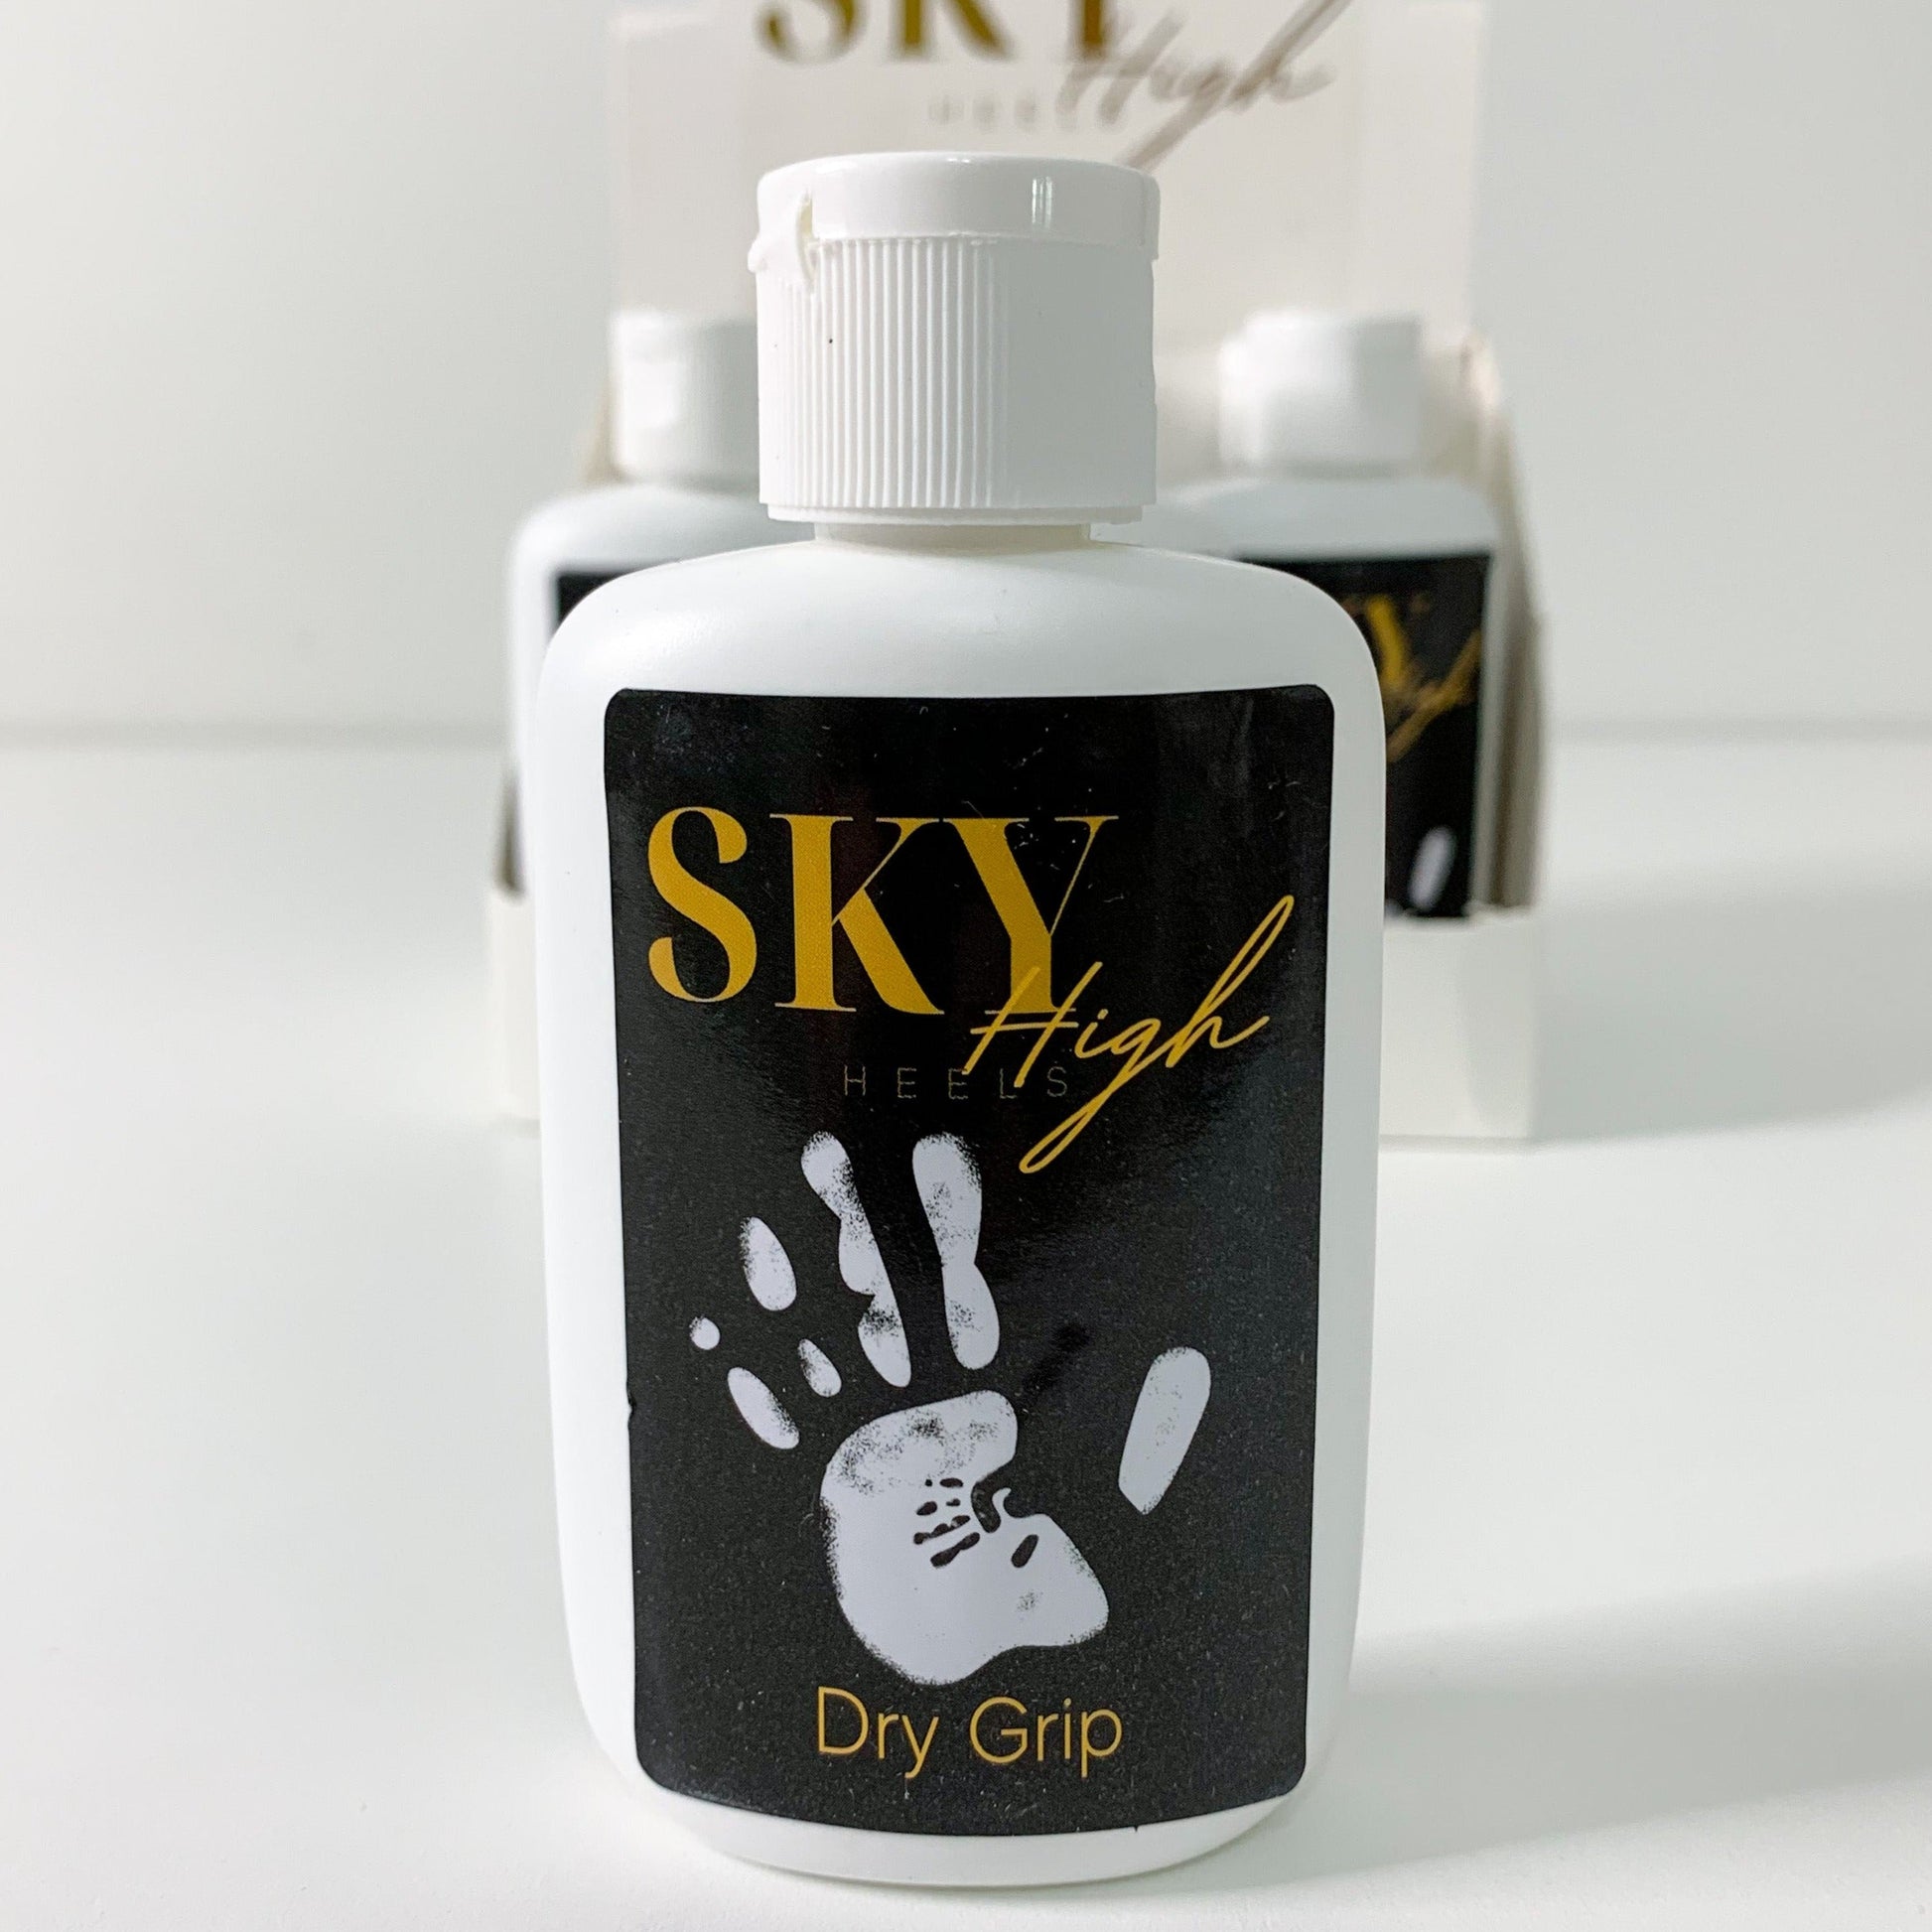 OG Dry Grip – Sky High Heels Australia